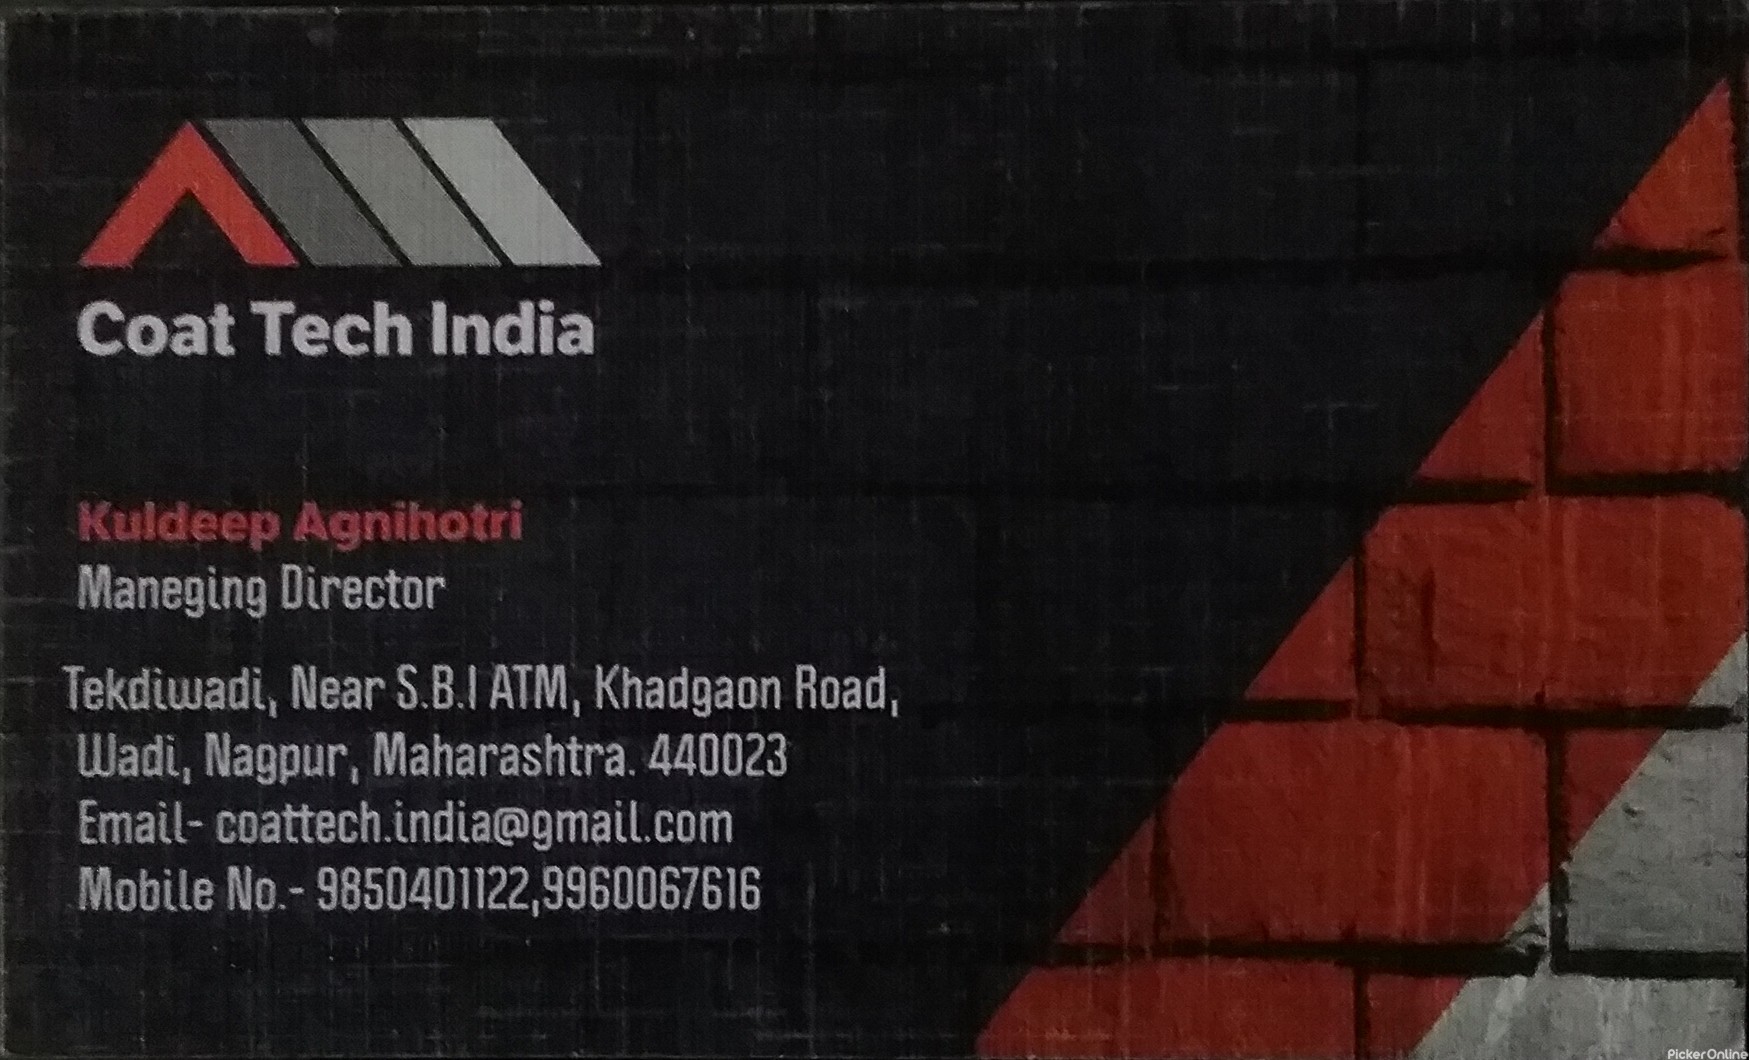 Coat Tech India in Wadi, Nagpur | Pickeronline